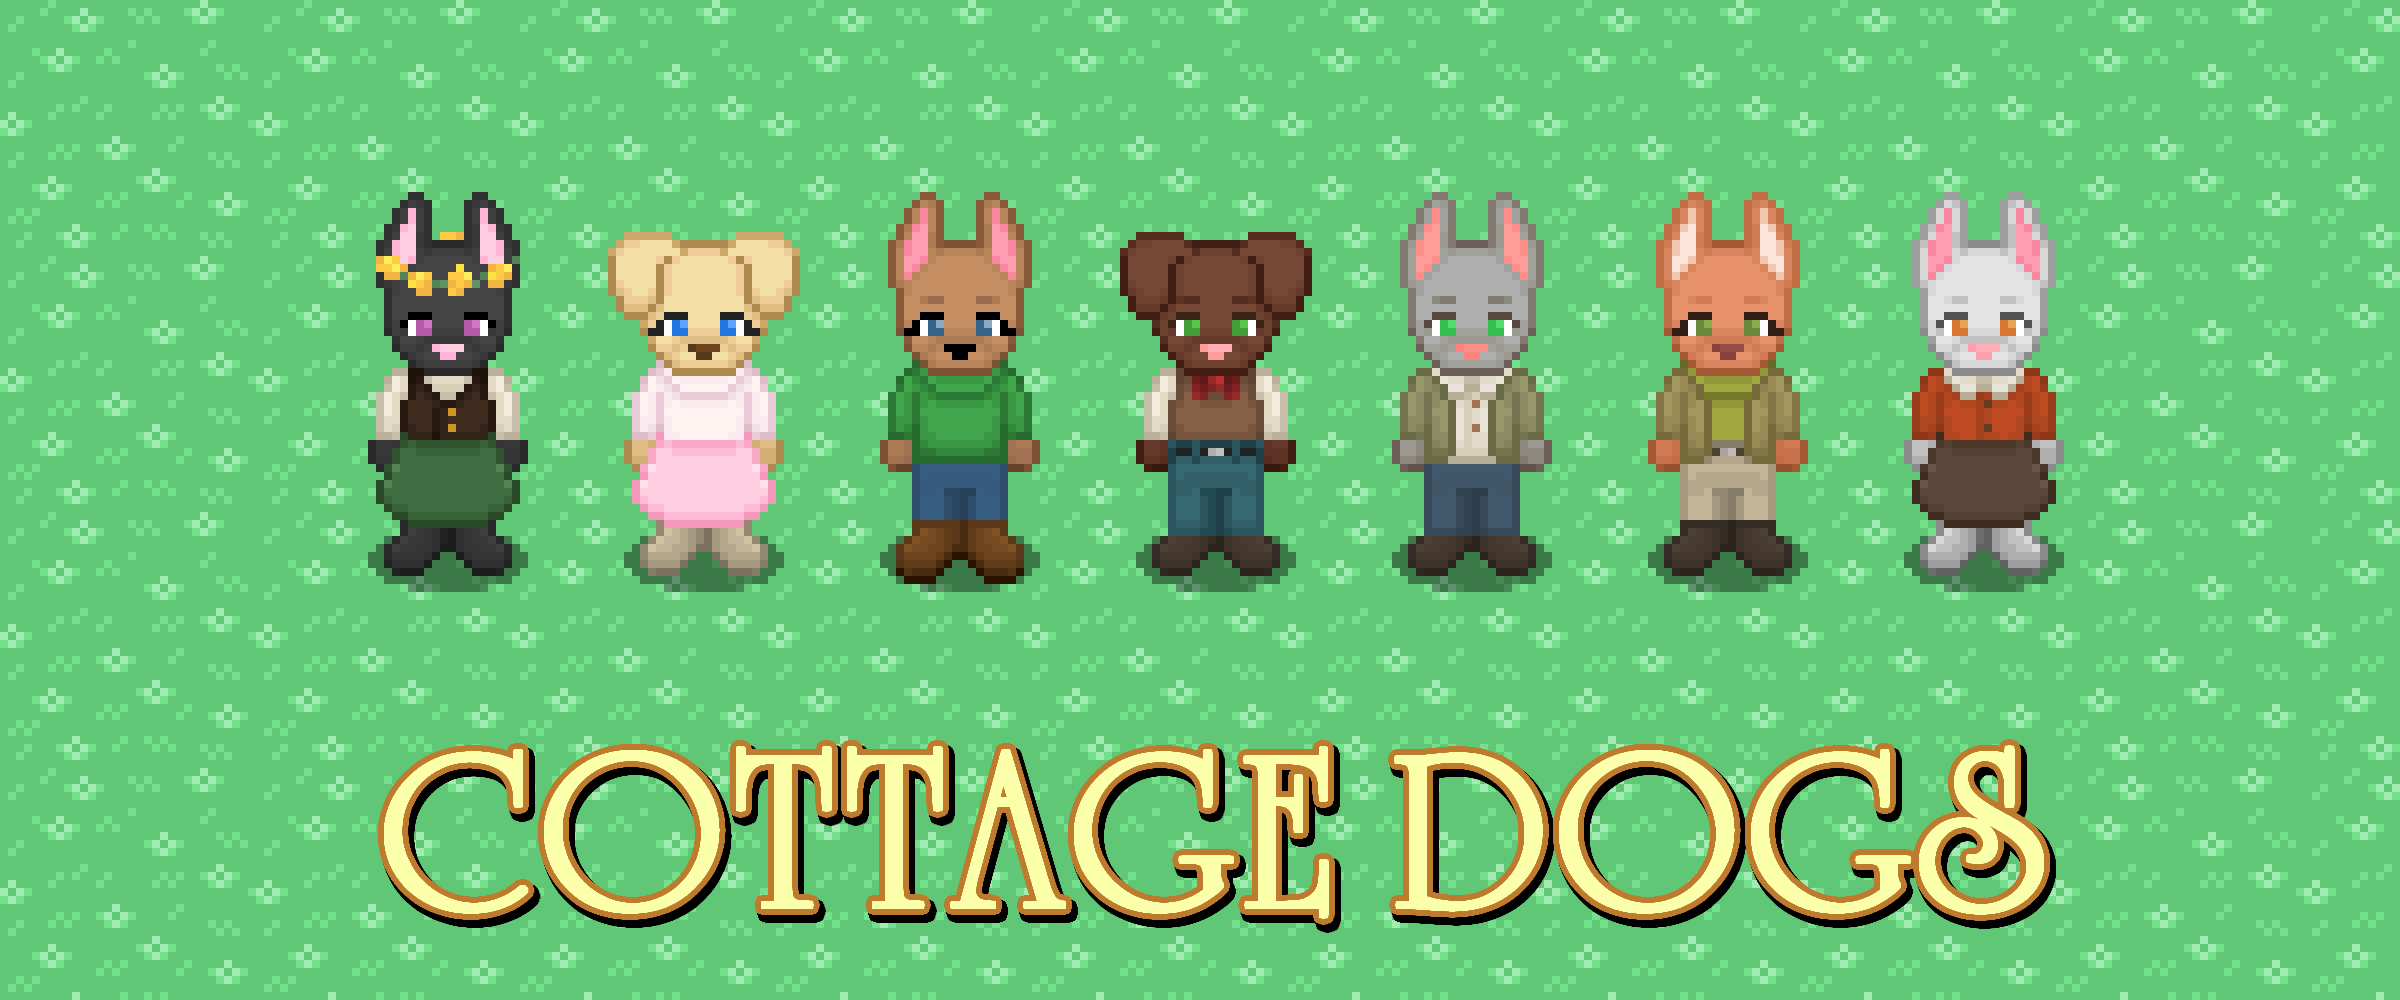 Cottage Dogs || Pixel Asset Pack